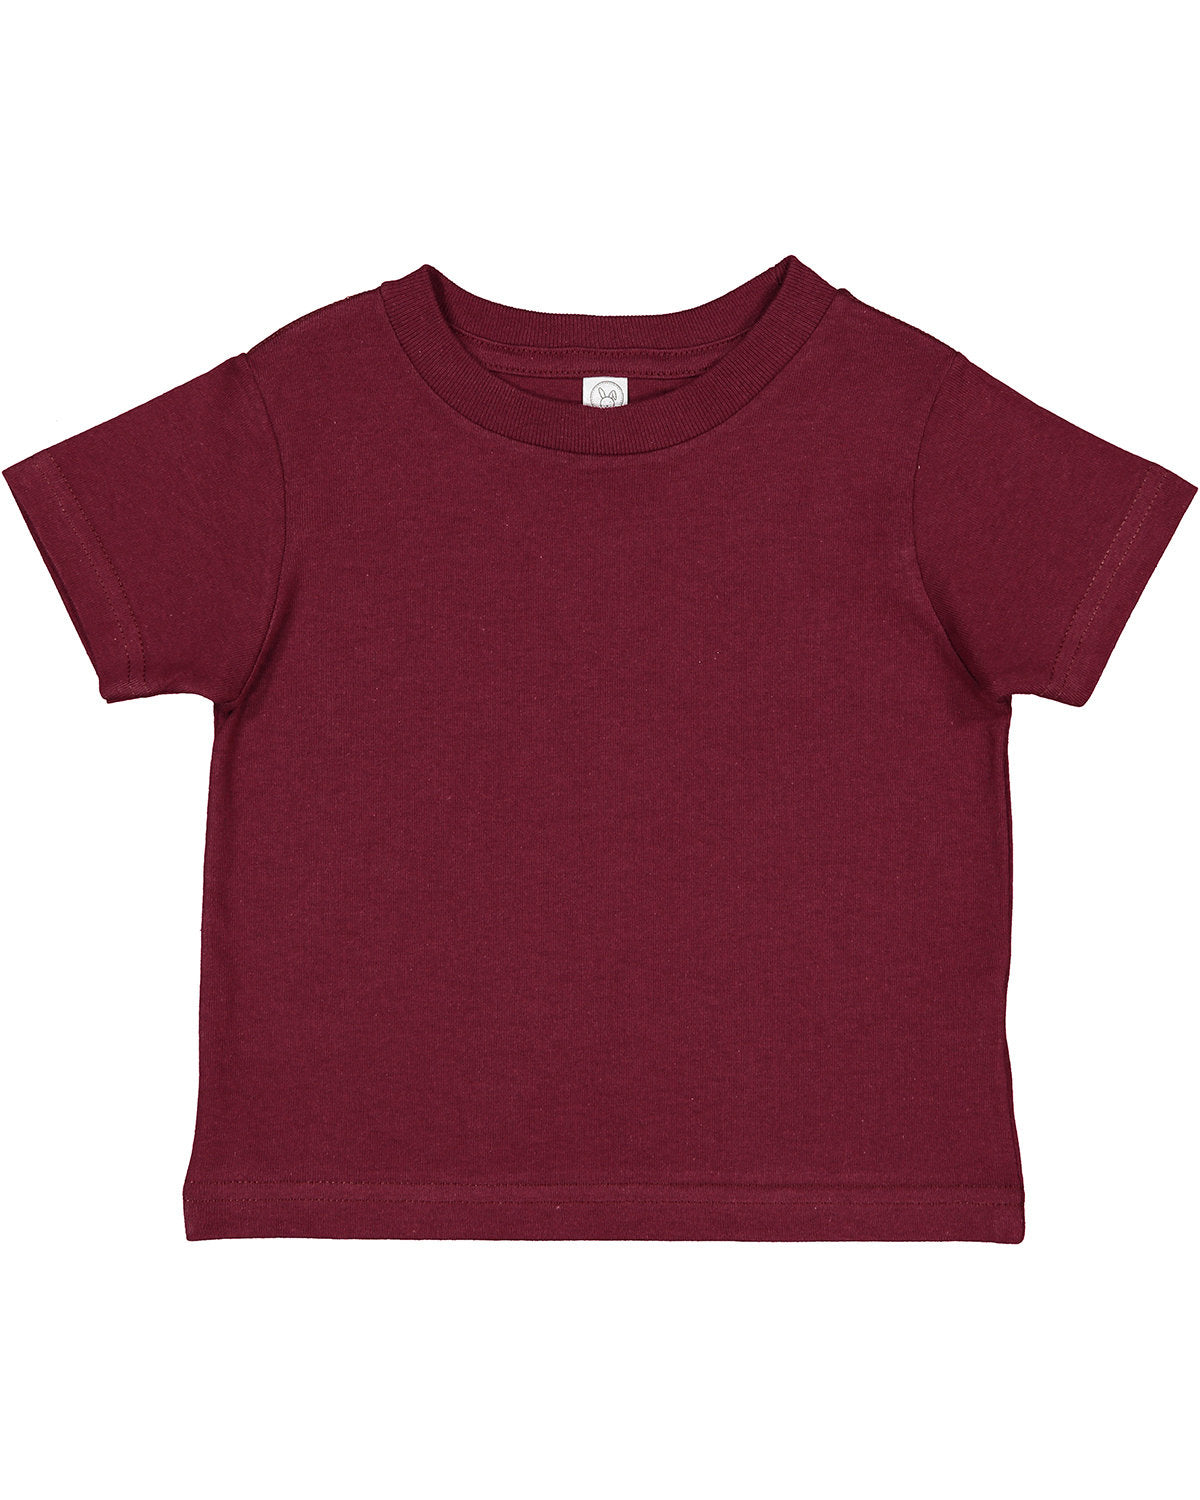 Rabbit Skins Toddler Cotton Jersey T-Shirt 2T / Maroon